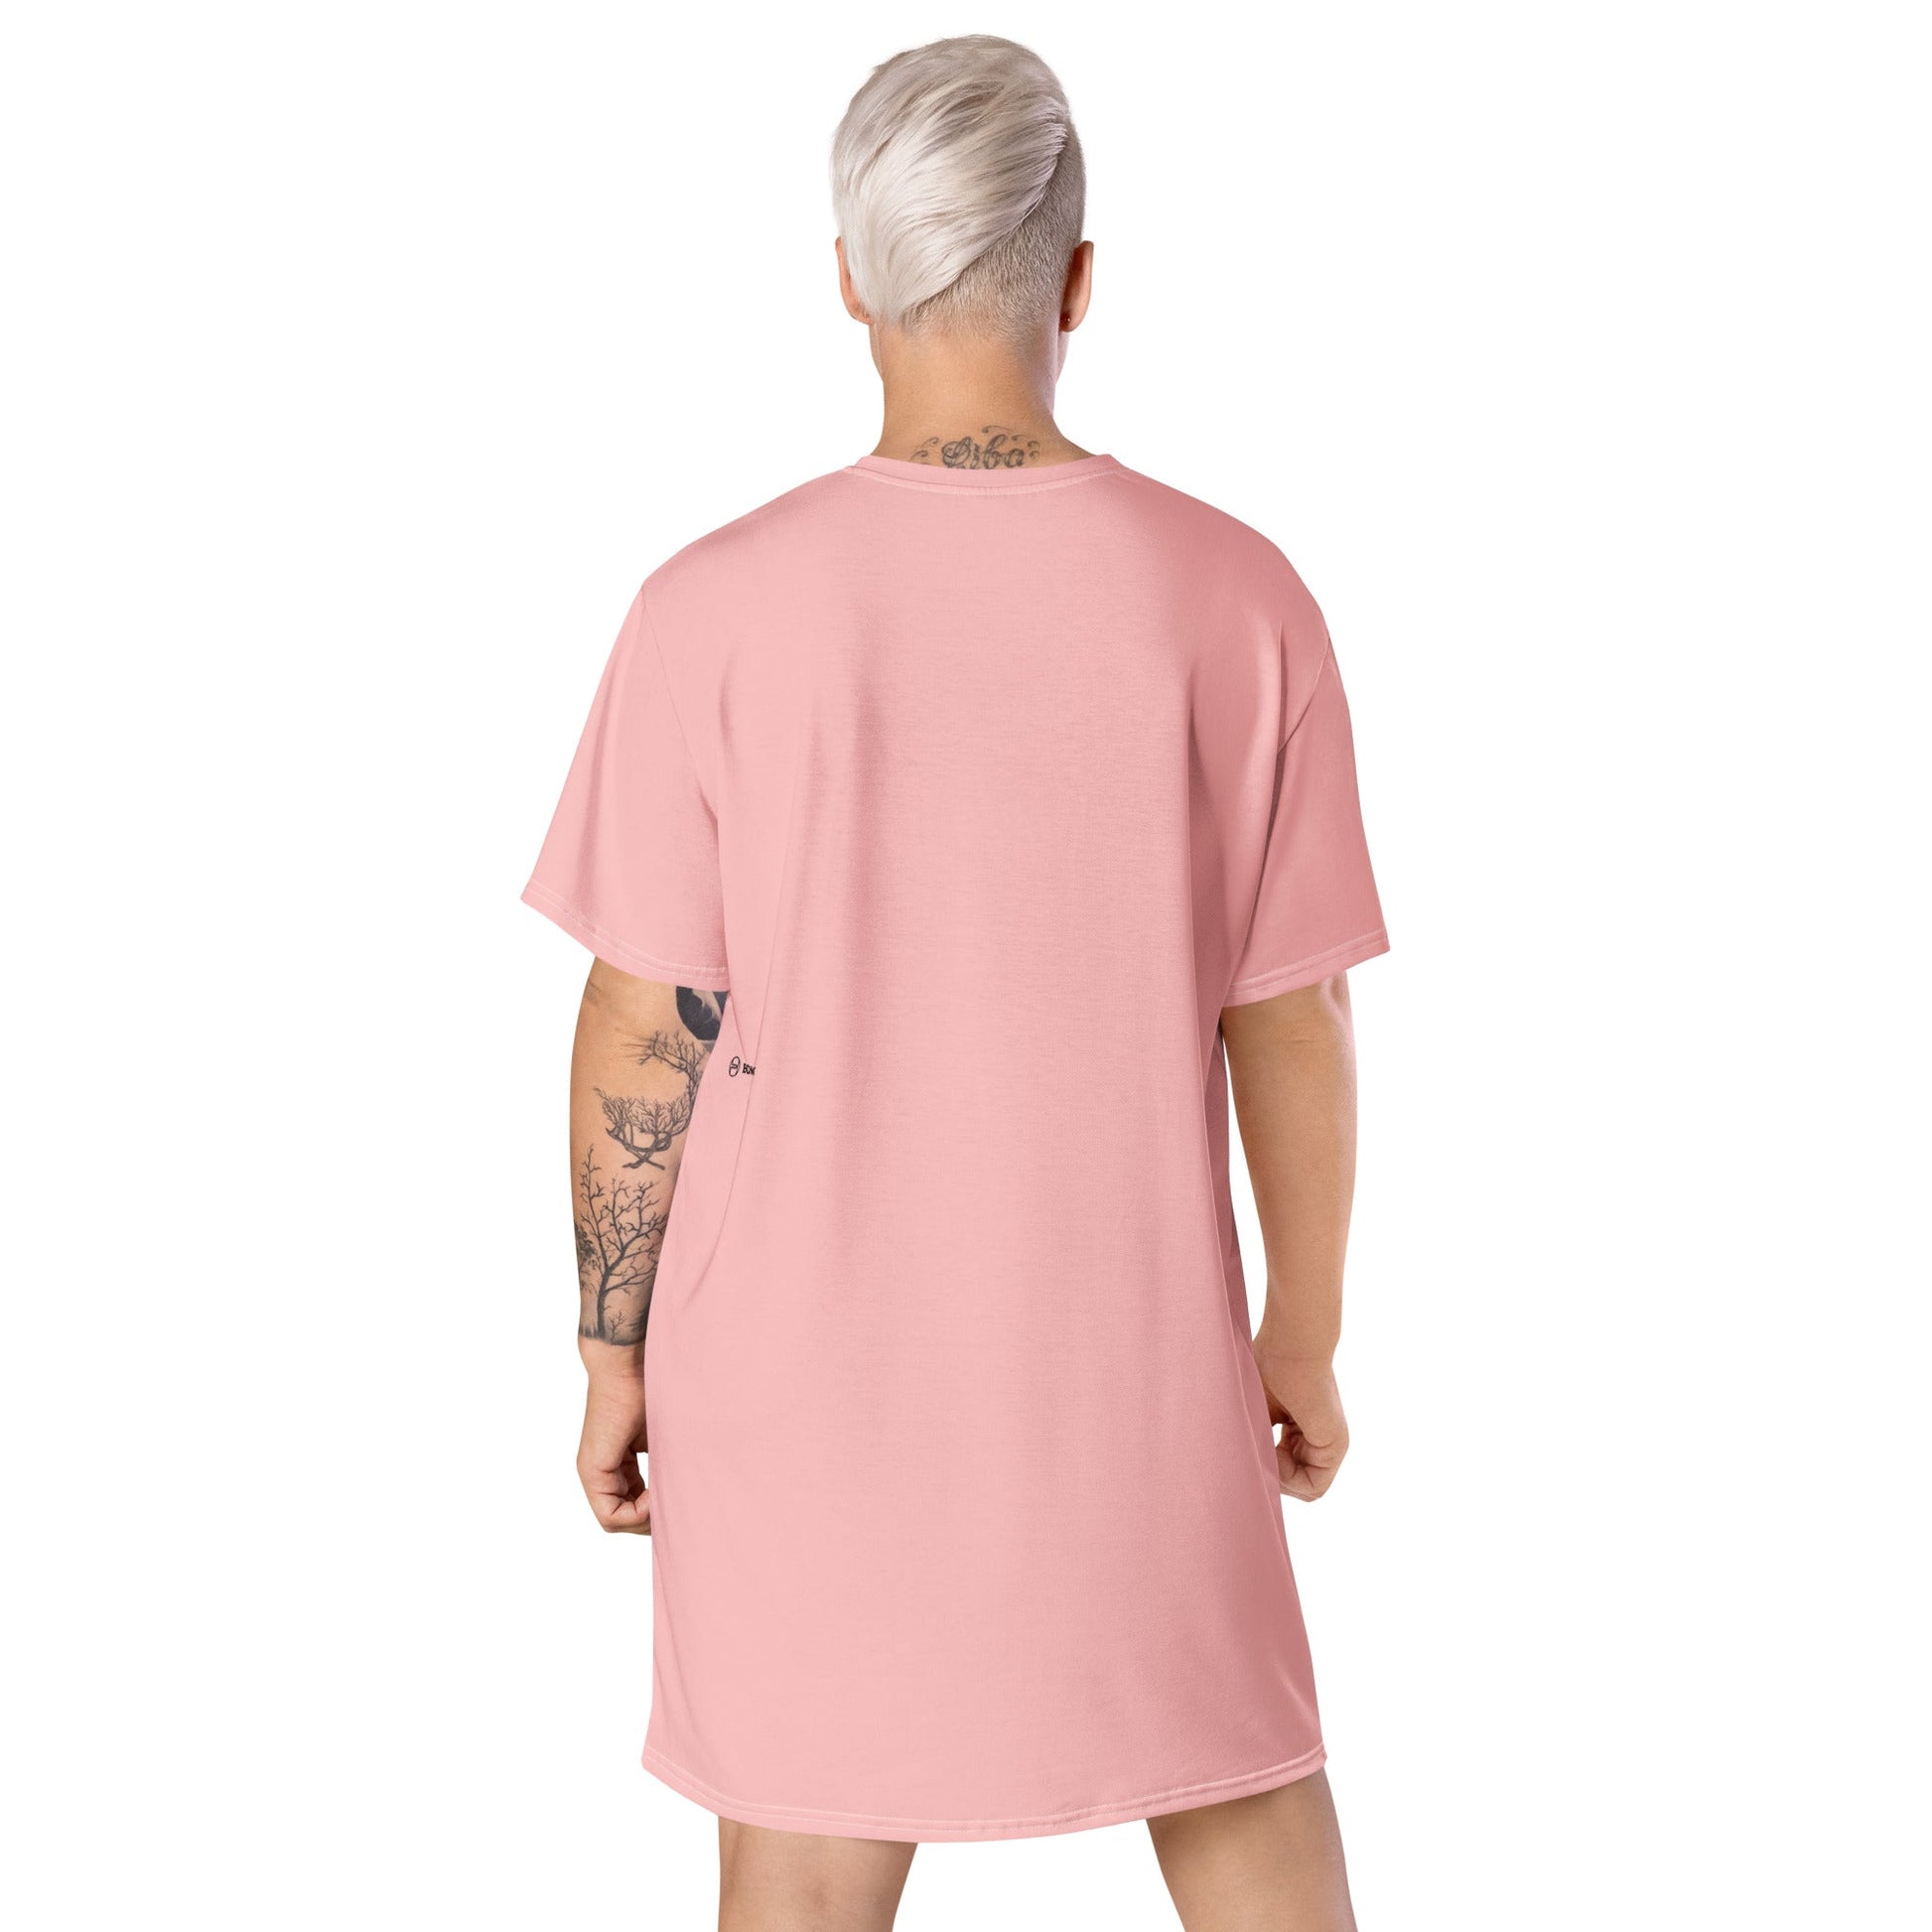 TENT SESSIONS Women's T-Shirt Dress - Bonotee